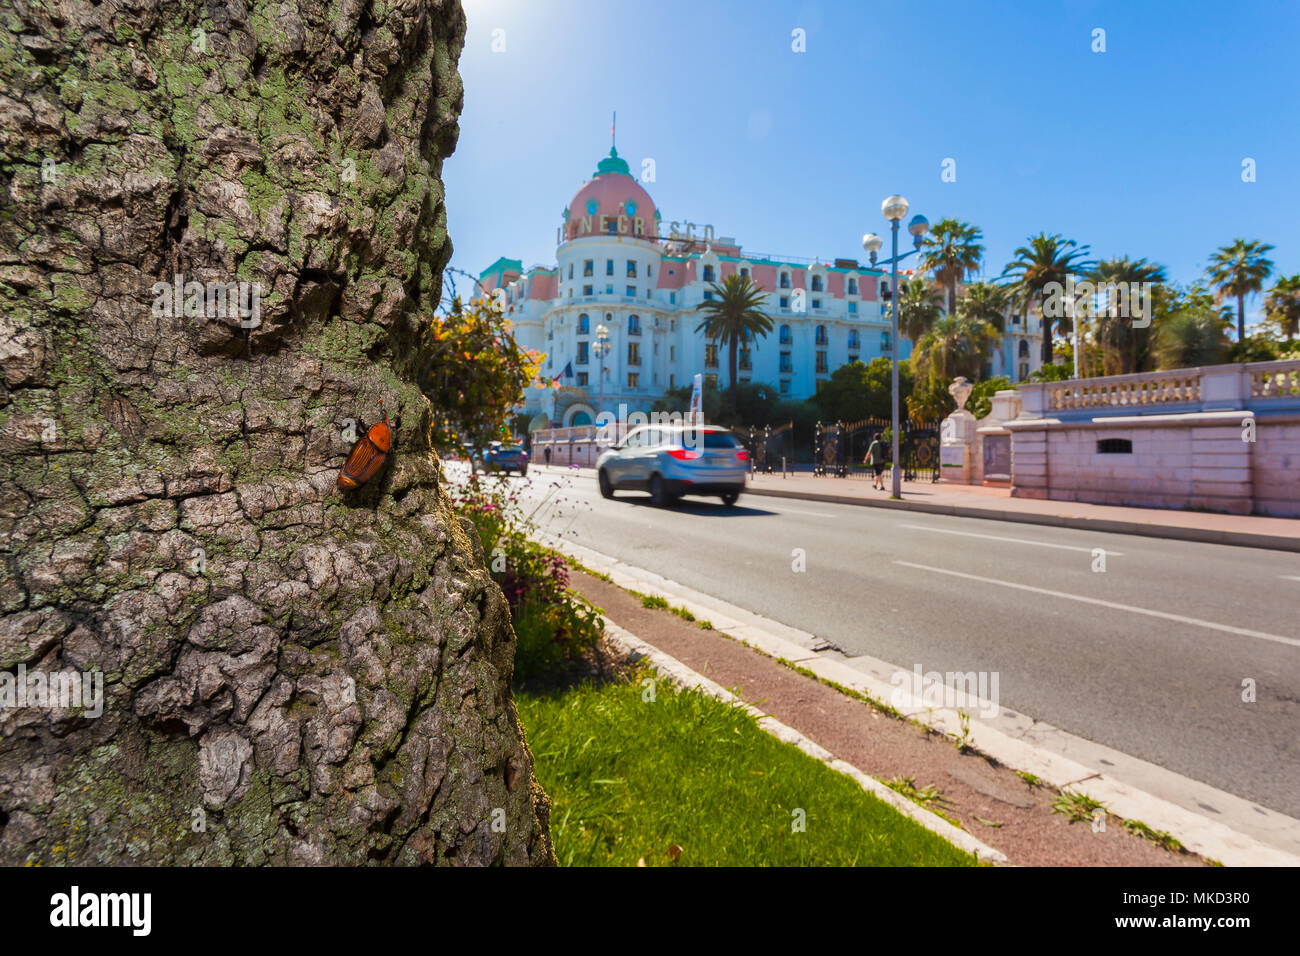 Red palm weevil (Rhynchophorus ferrugineus) over palm tree, Promenade des Anglais, Nice, France Stock Photo